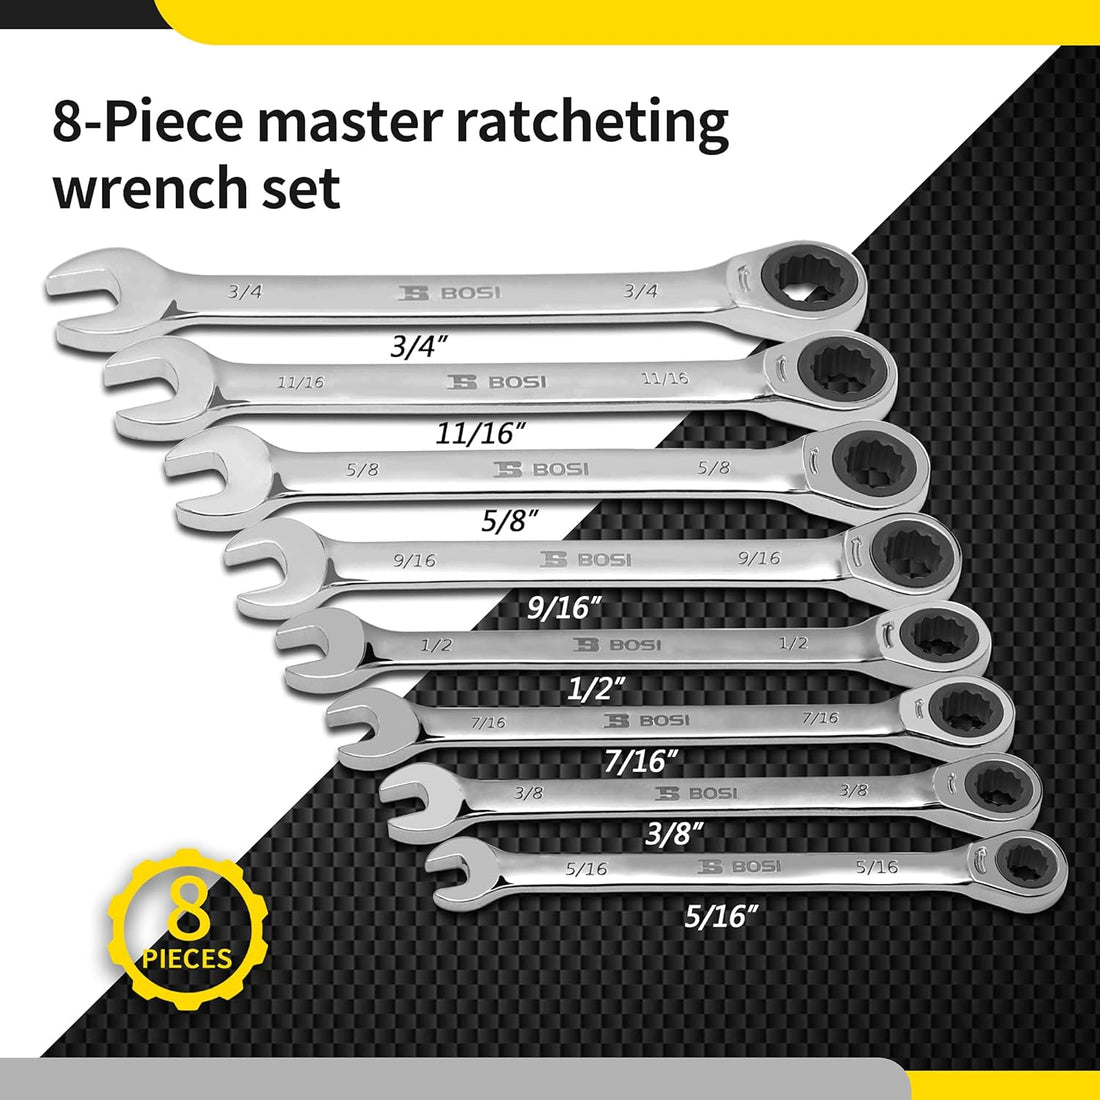 B BOSI TOOLS Ratcheting Wrench Set, SAE, 8-Piece, 5/16'', 3/8'', 7/16'', 1/2'', 9/16'', 5/8'', 11/16'', 3/4'', Chrome Vanadium steel, with Carrying Bag